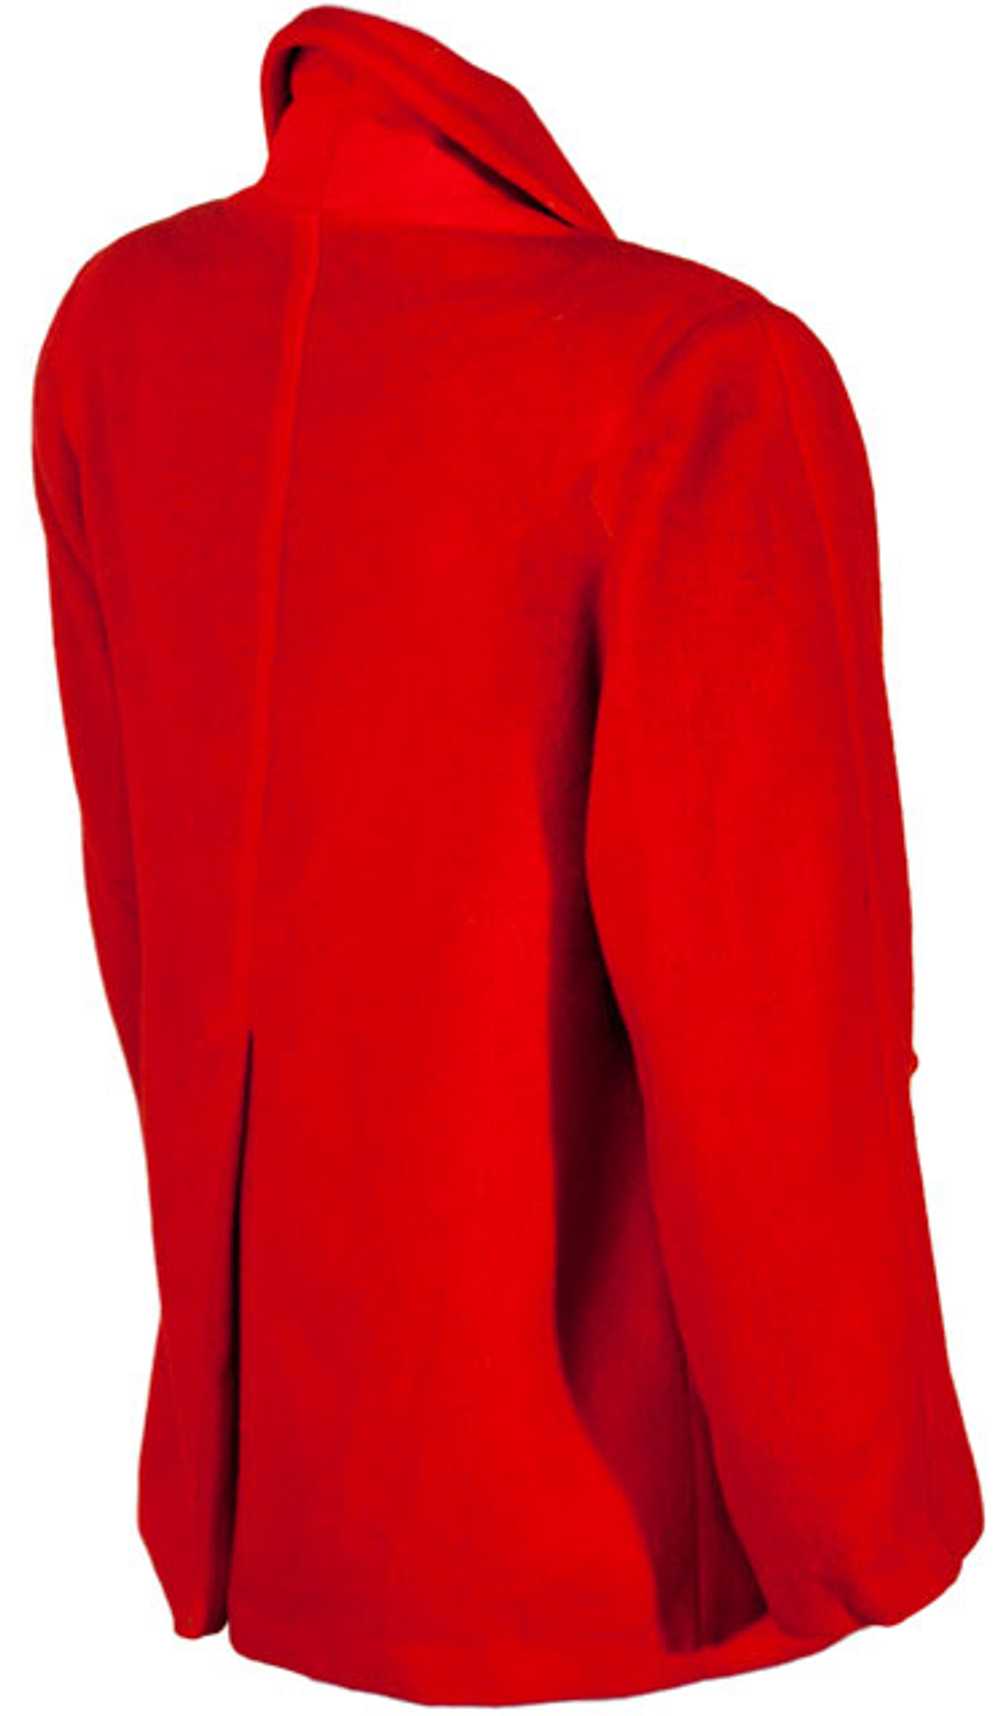 1950s Bold Red Jacket - image 3